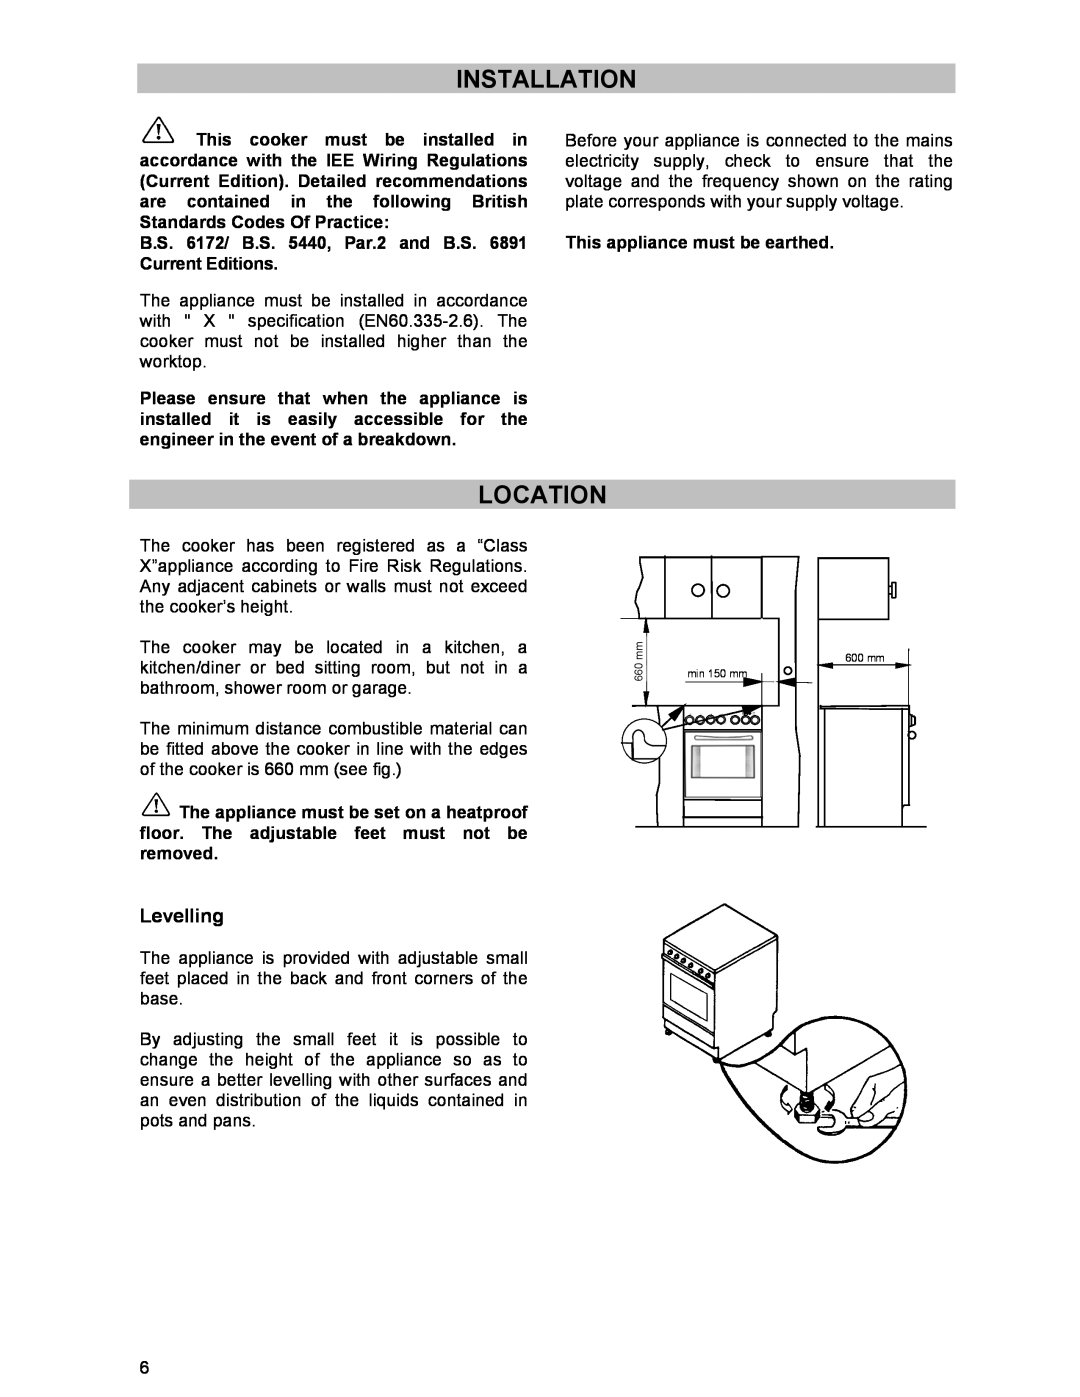 Zanussi ZCE 531 GB manual Installation, Location, Levelling 